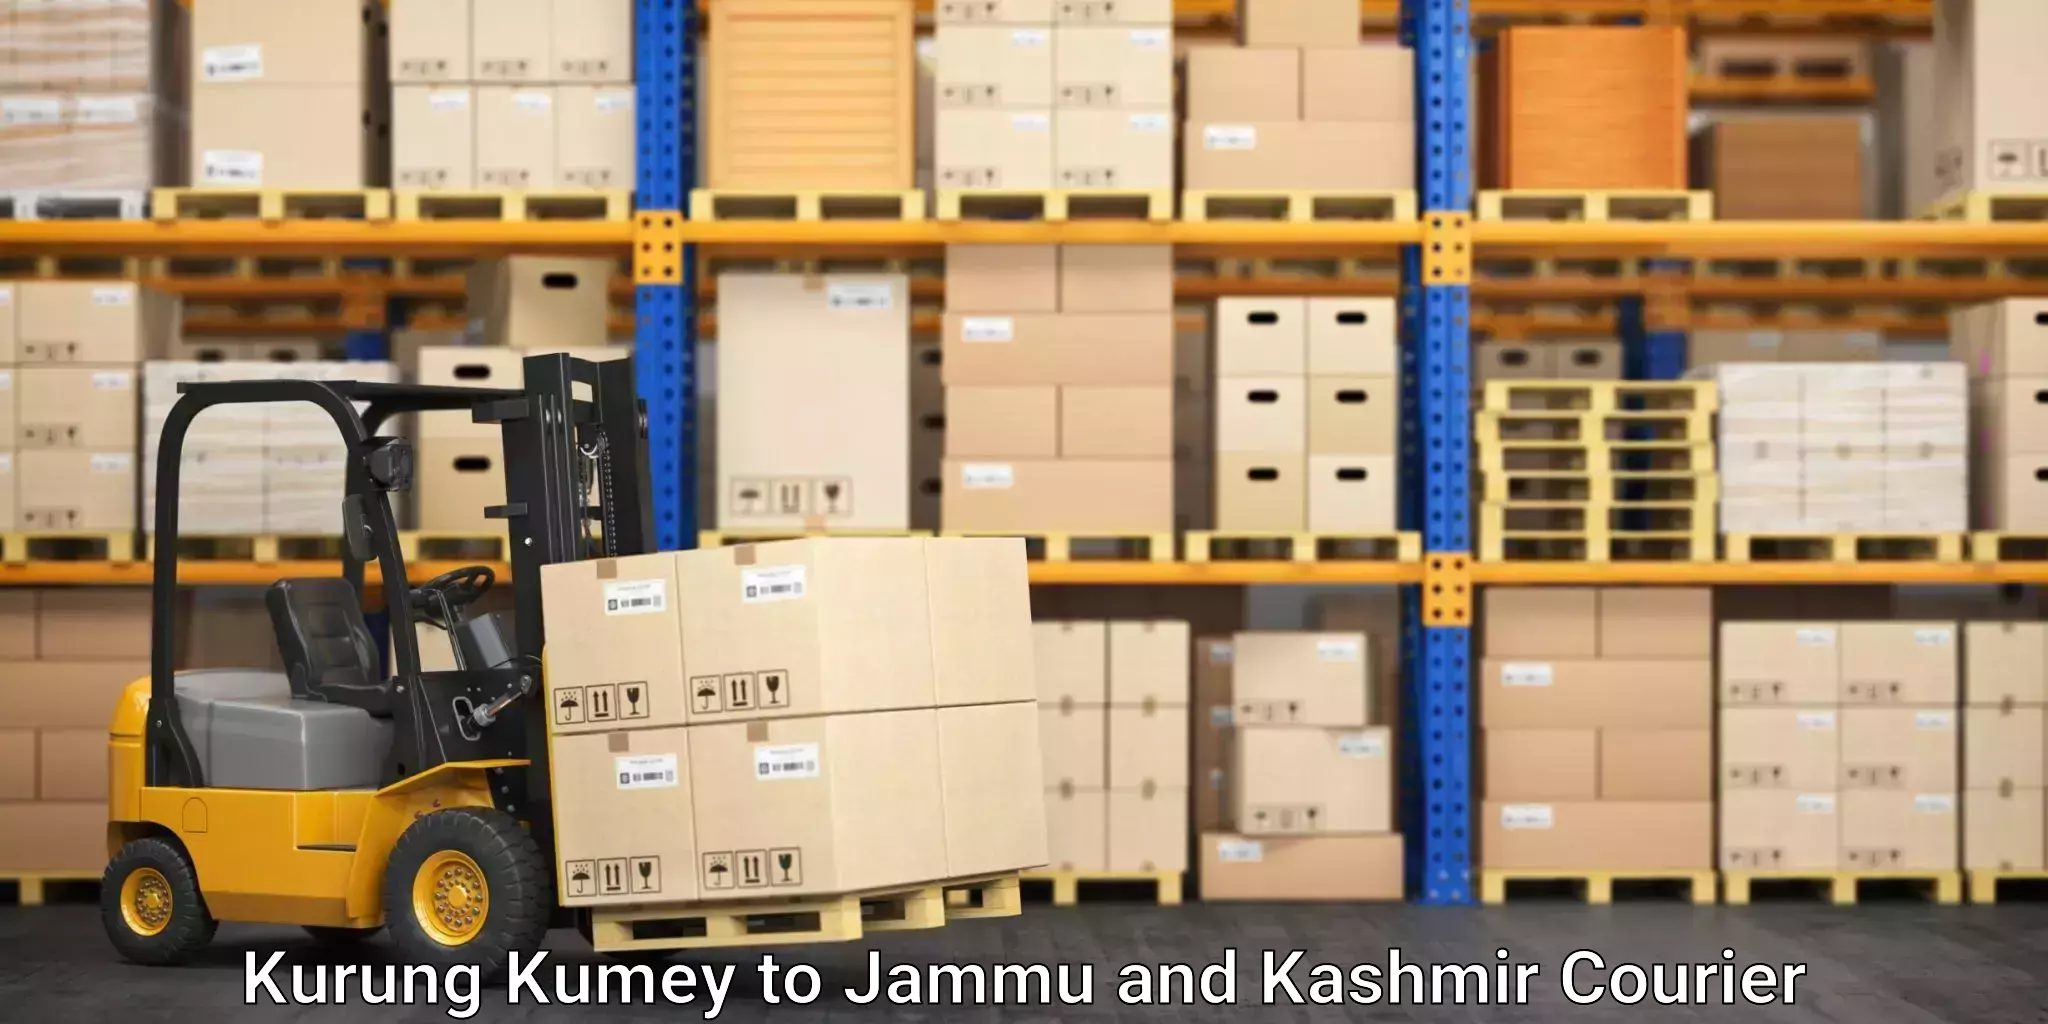 Express shipping Kurung Kumey to Srinagar Kashmir